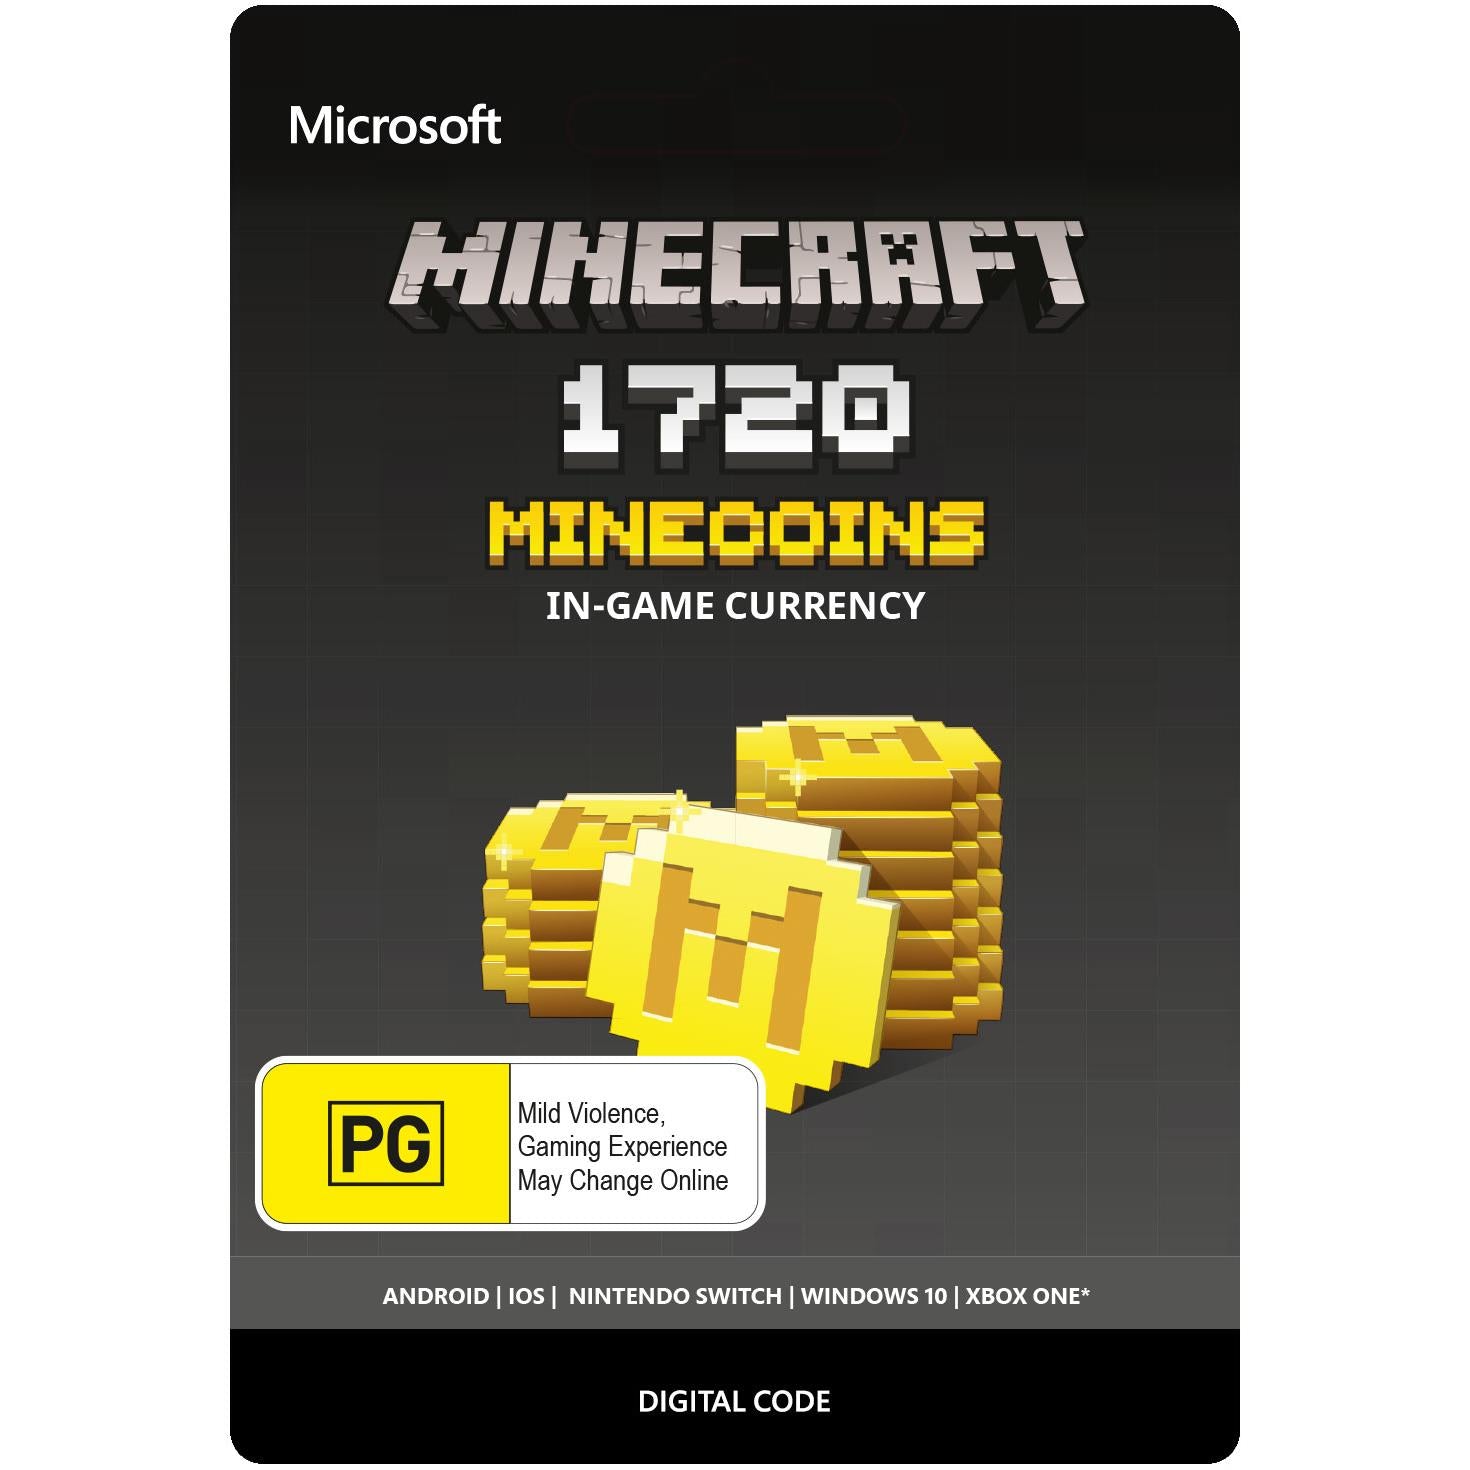 How do I get my Minecraft coins - Microsoft Community